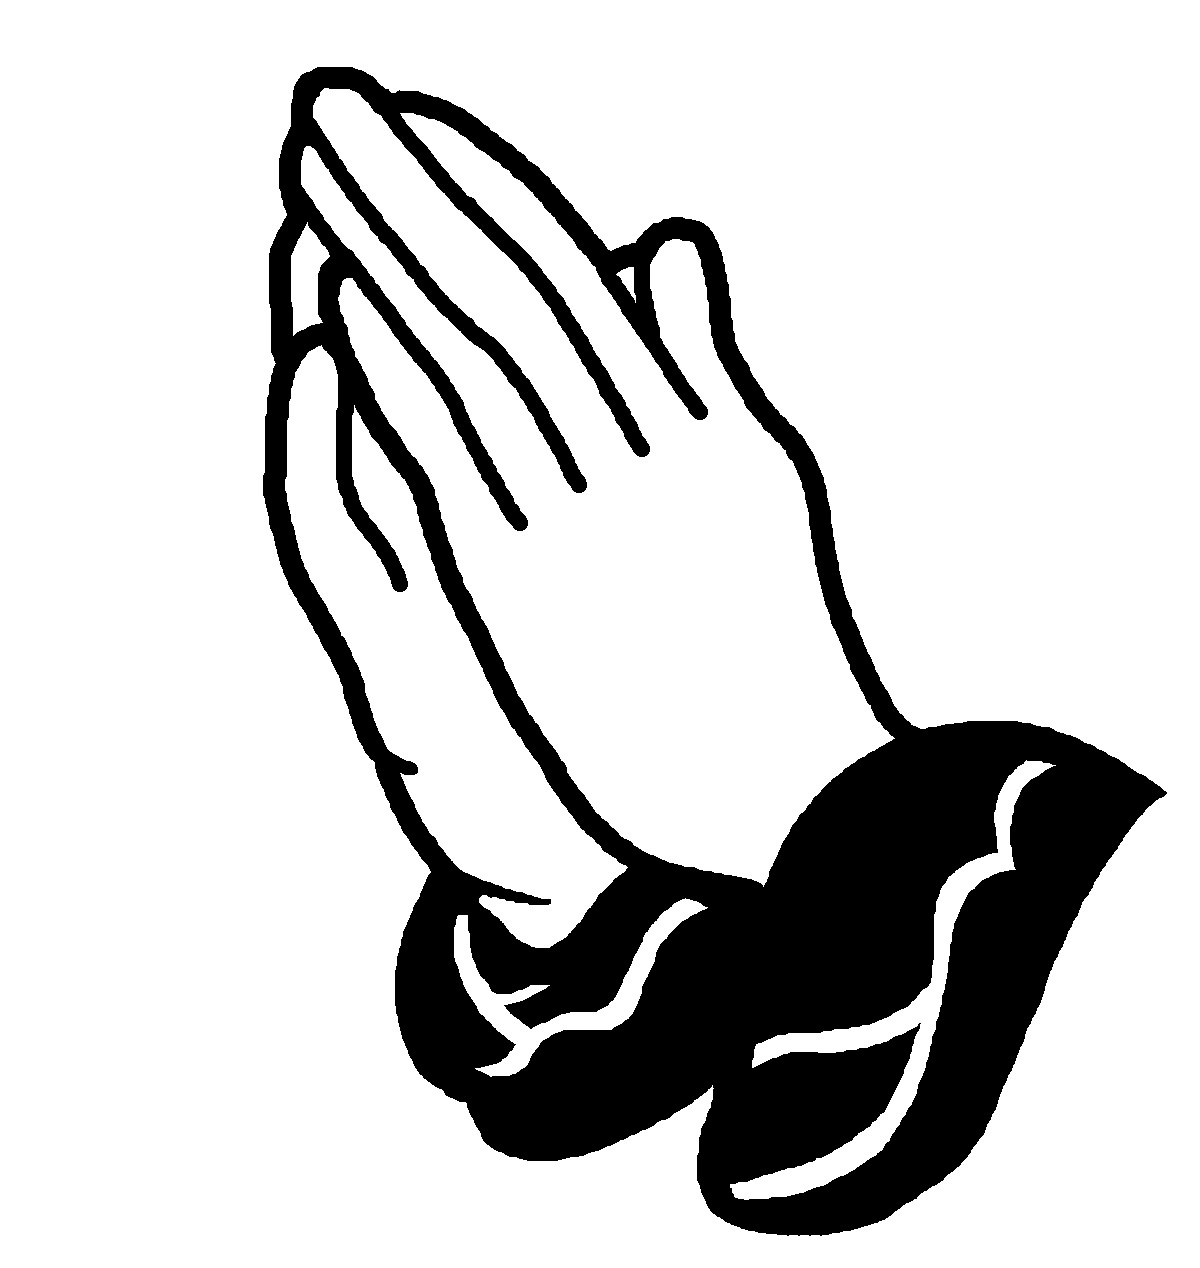 Praying hands vector clipart